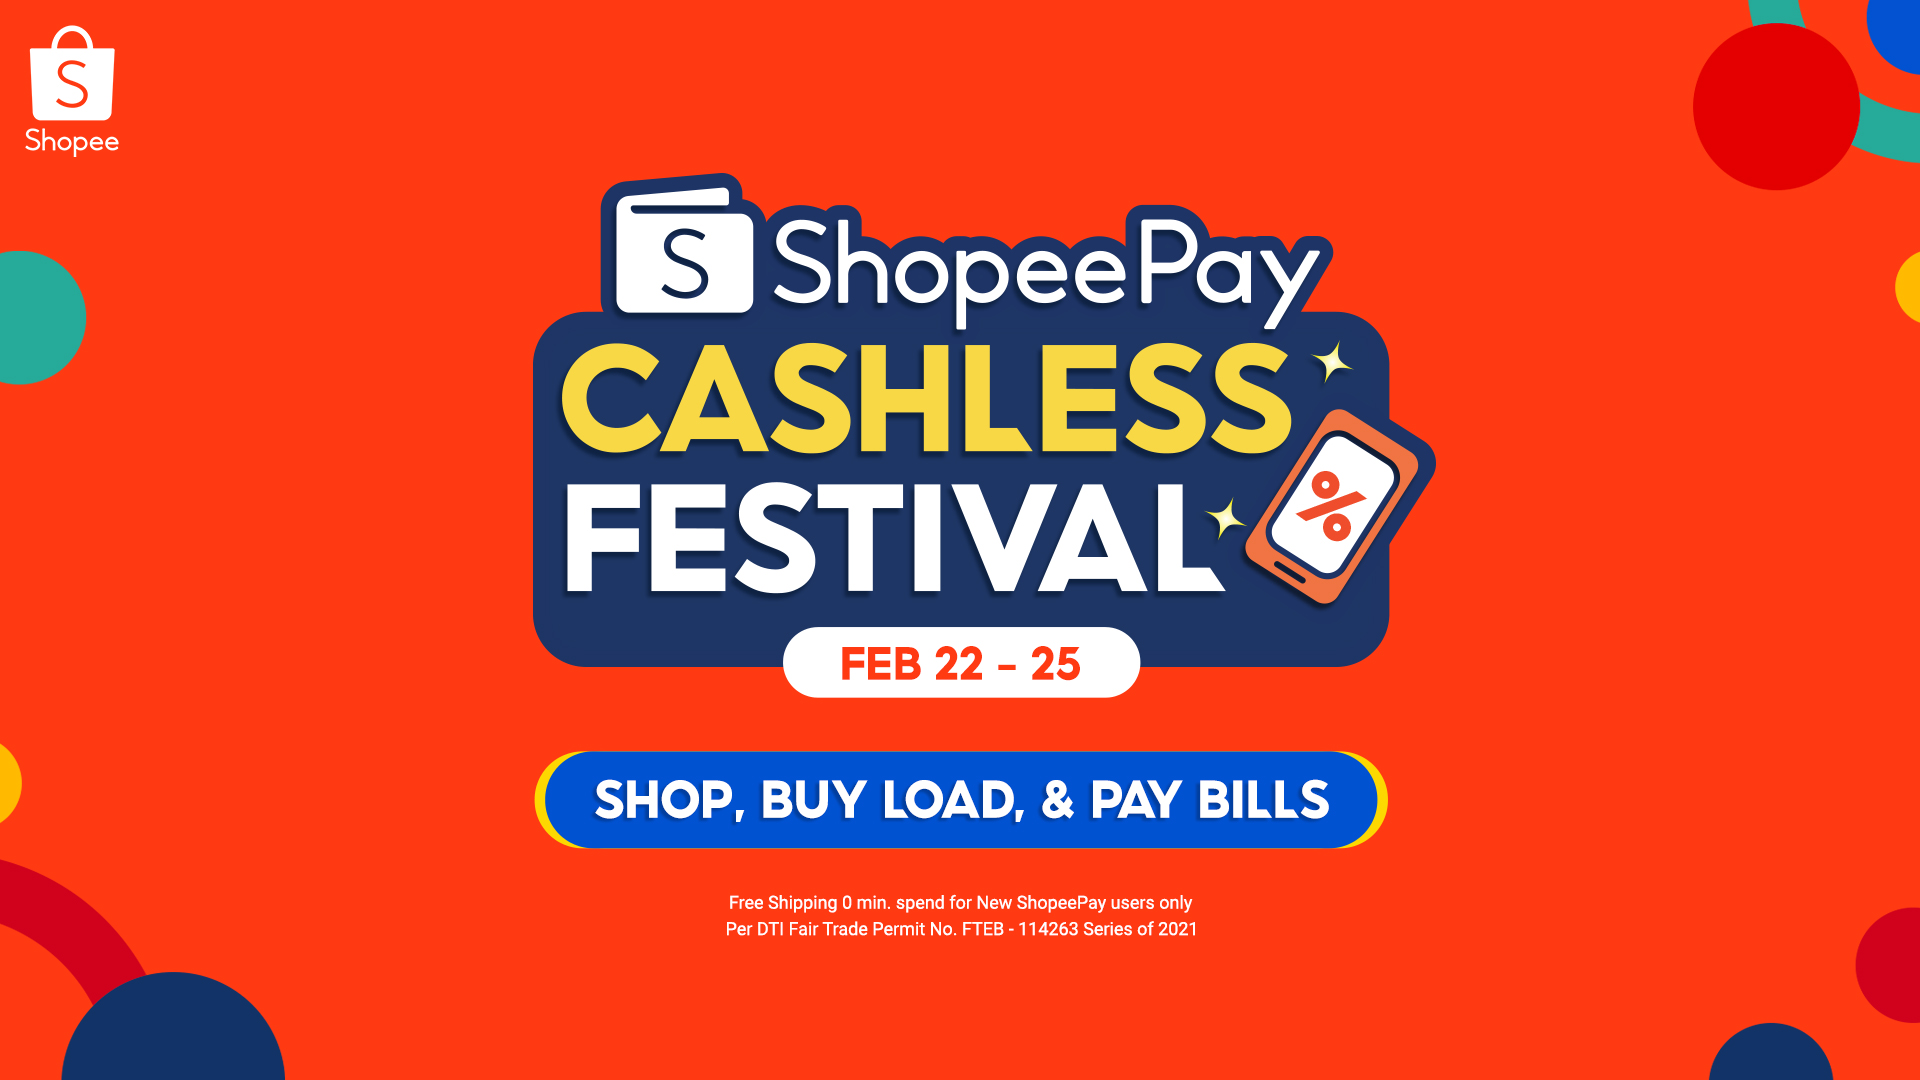 Enjoy Free Shipping, Cashback, and More at the 3.3 ShopeePay Cashless Festival